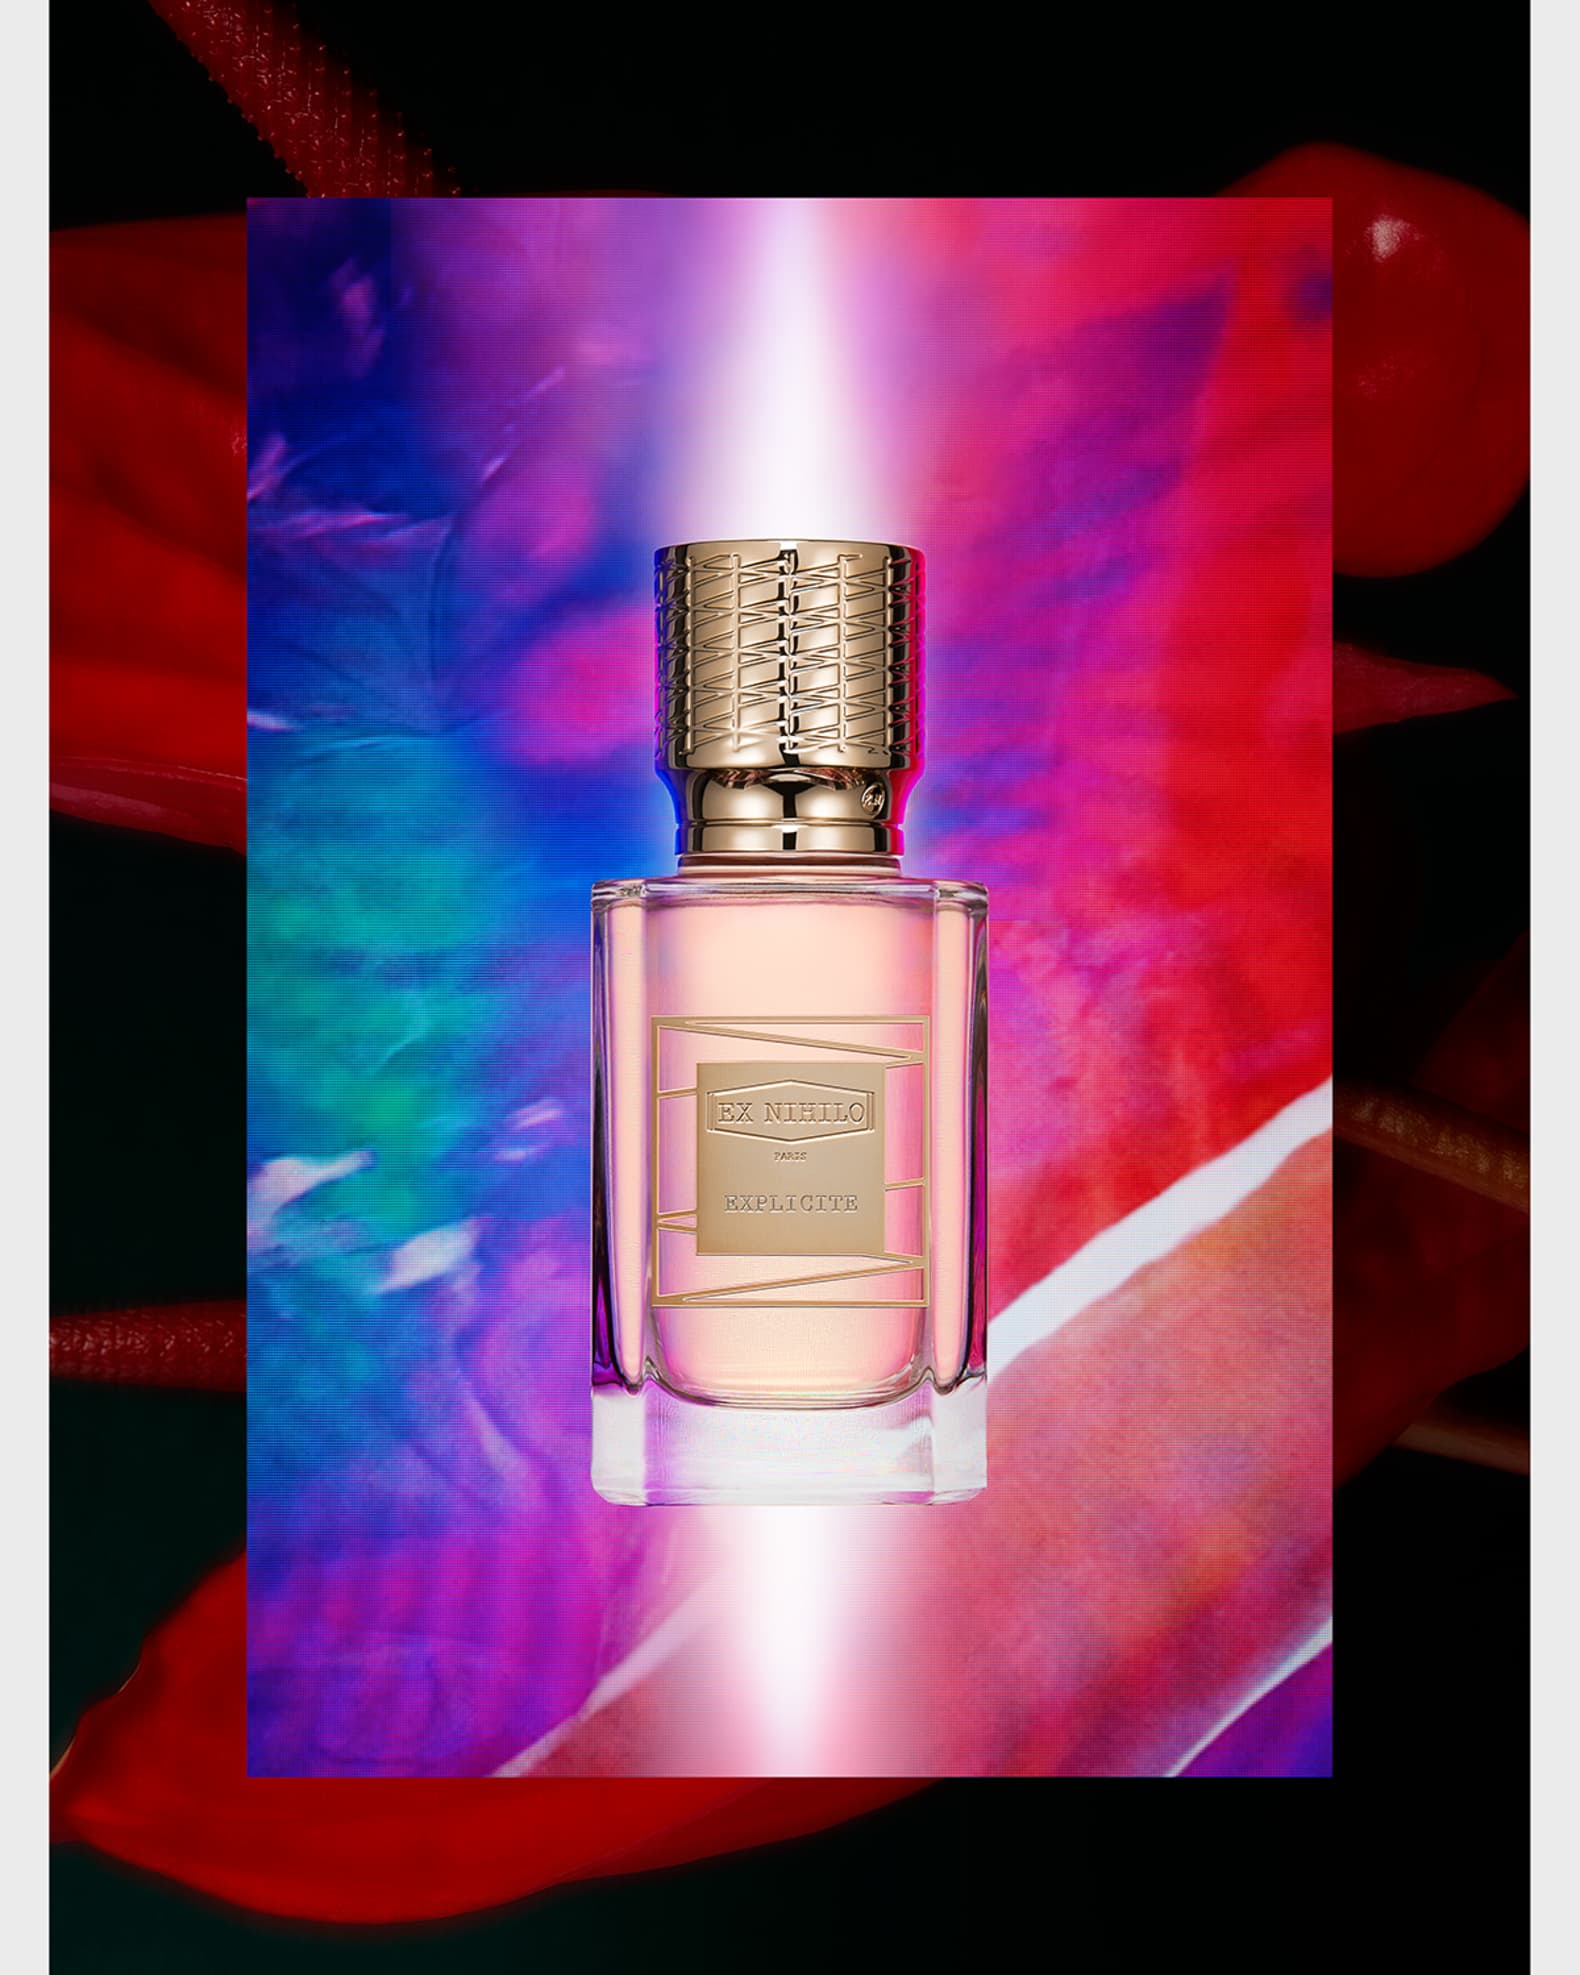 Ex Nihilo EXPLICITE Eau de parfum, 3.4 oz. | Neiman Marcus